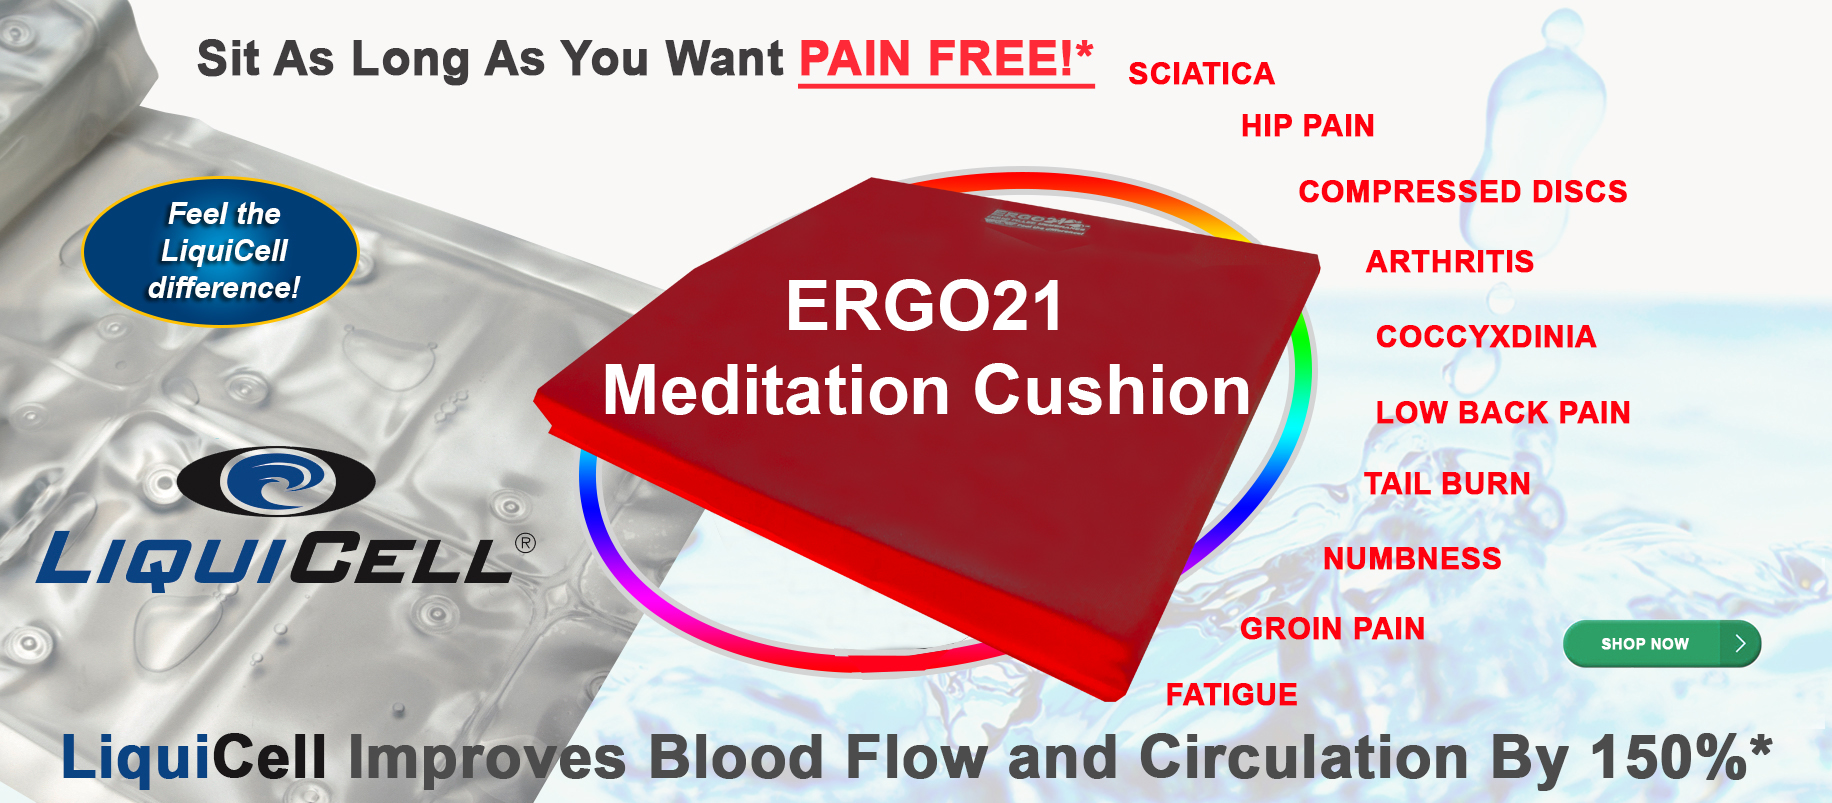 Ergo21 Meditation Cushion